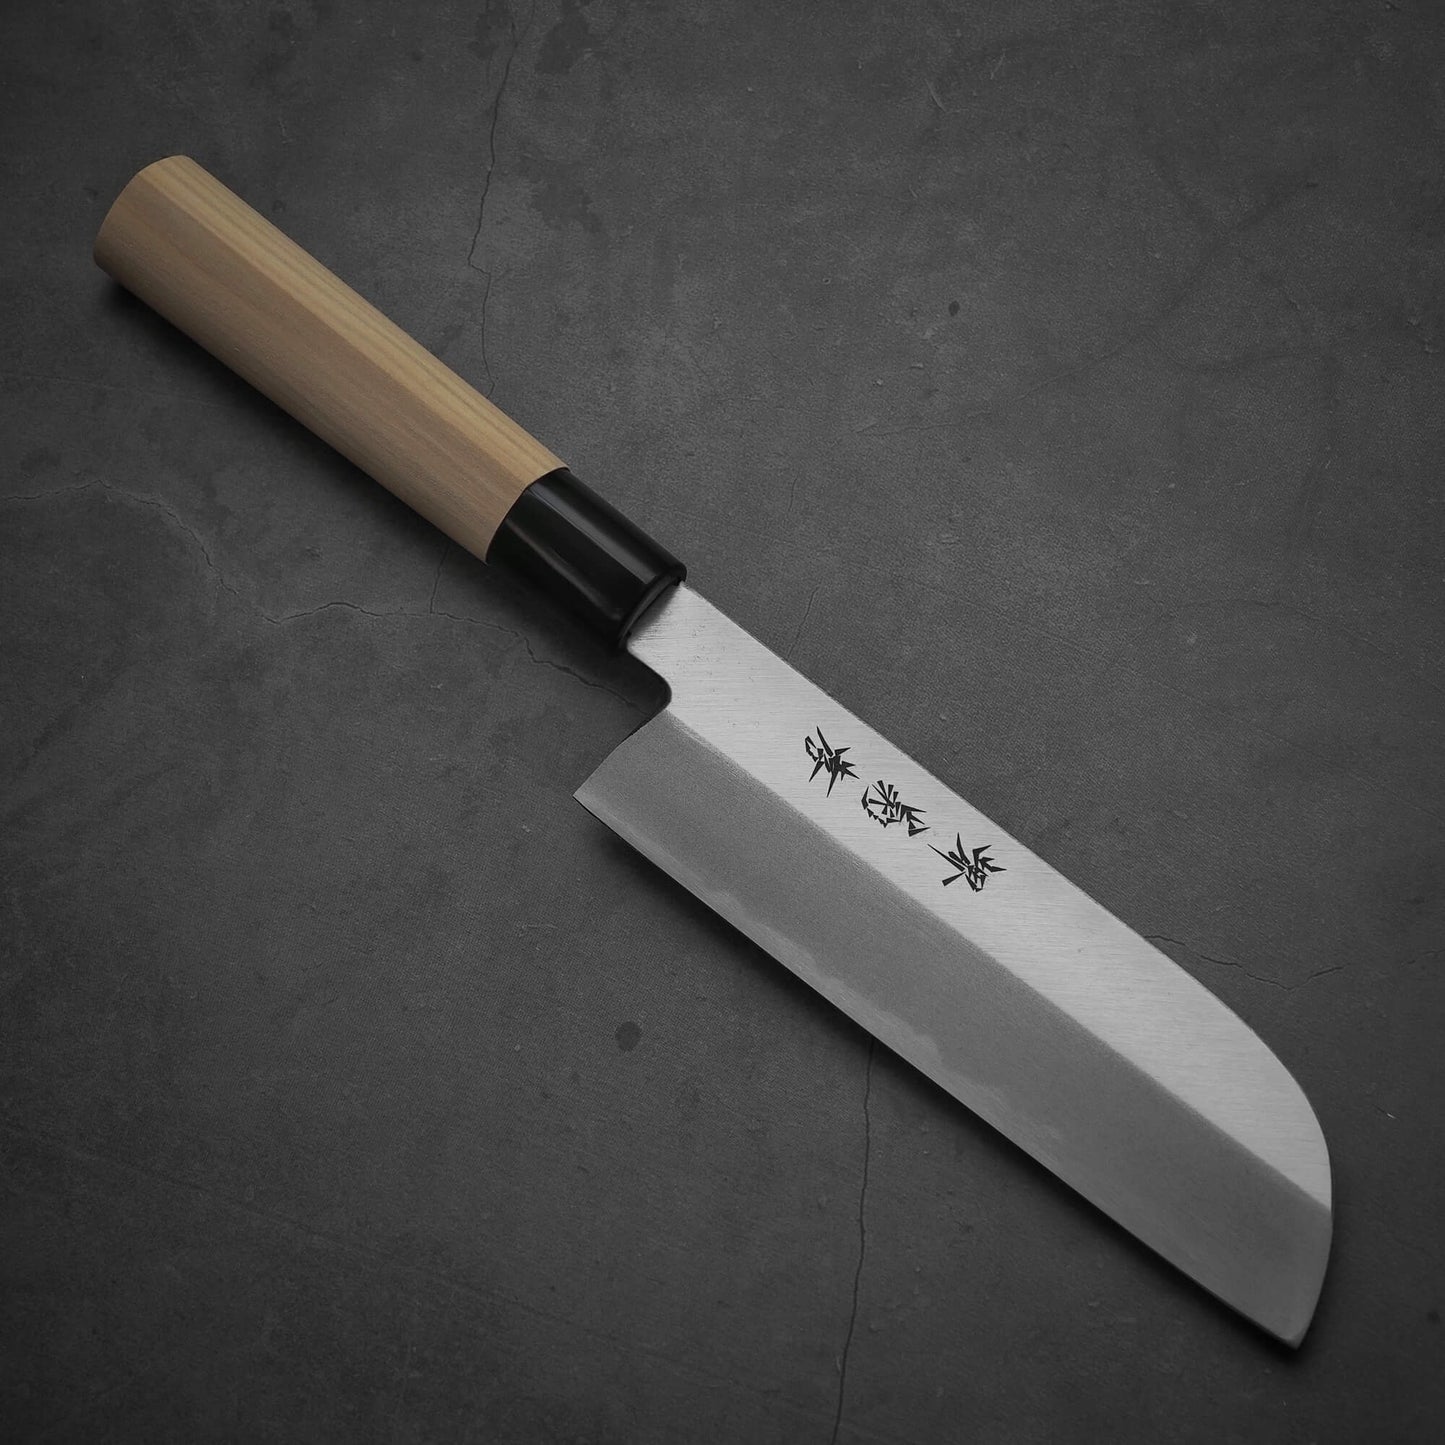 Top view of Sakai Takayuki shirogami#3 kamagata usuba knife where the pointed tip is facing towards lower right